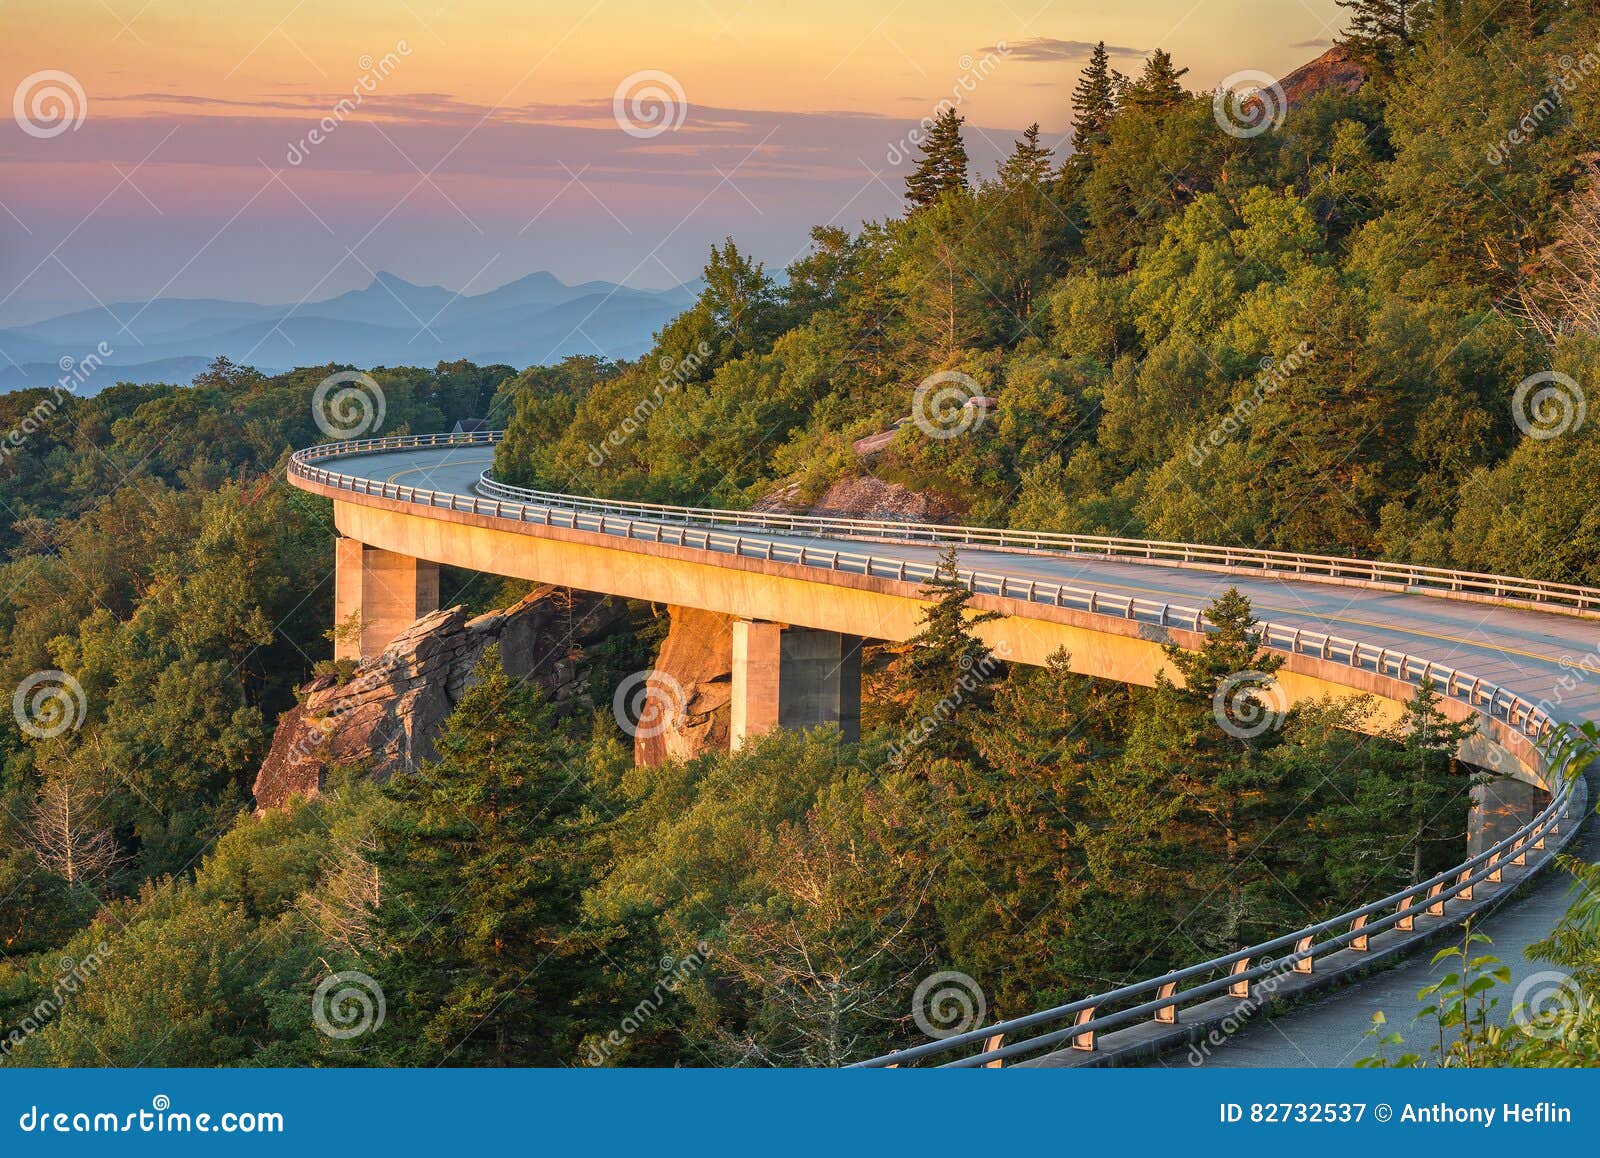 lynn cove viaduct, scenic sunrise, north carolina